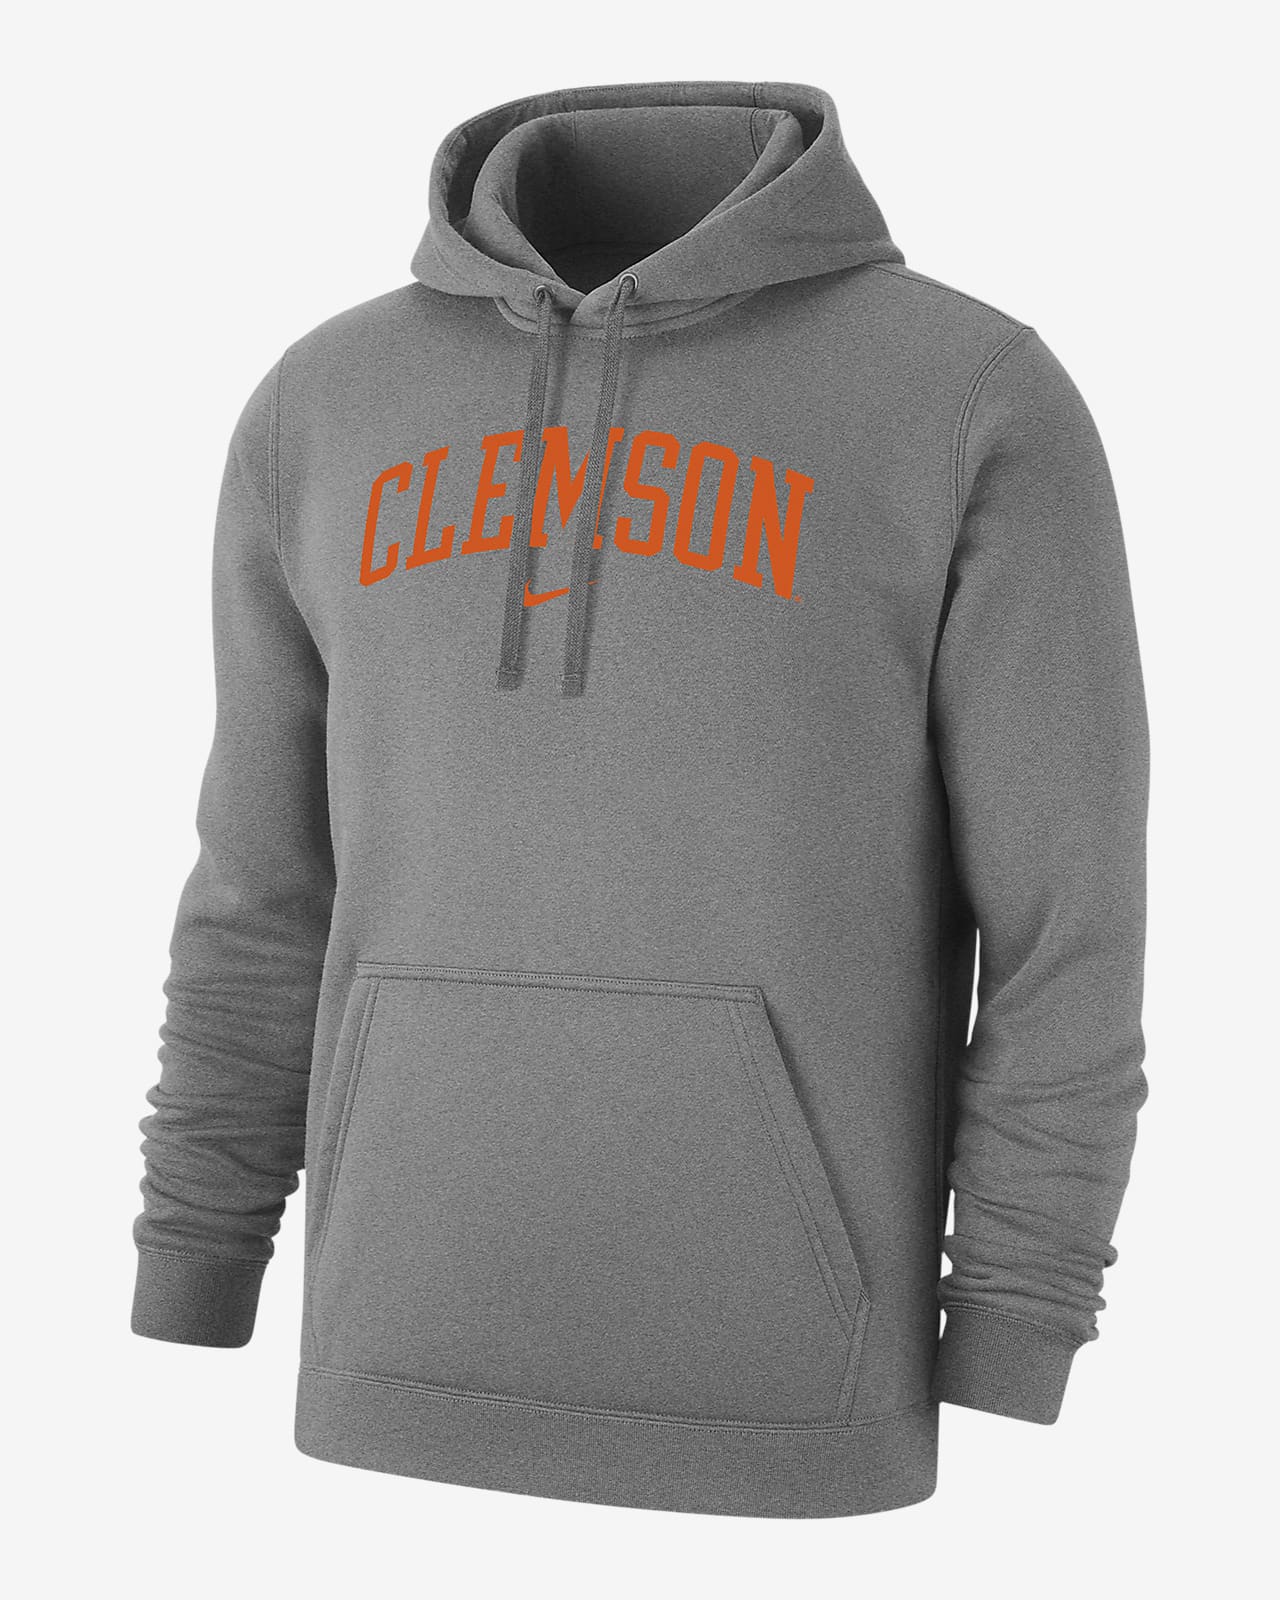 Clemson Club Fleece Men's Nike College Pullover Hoodie